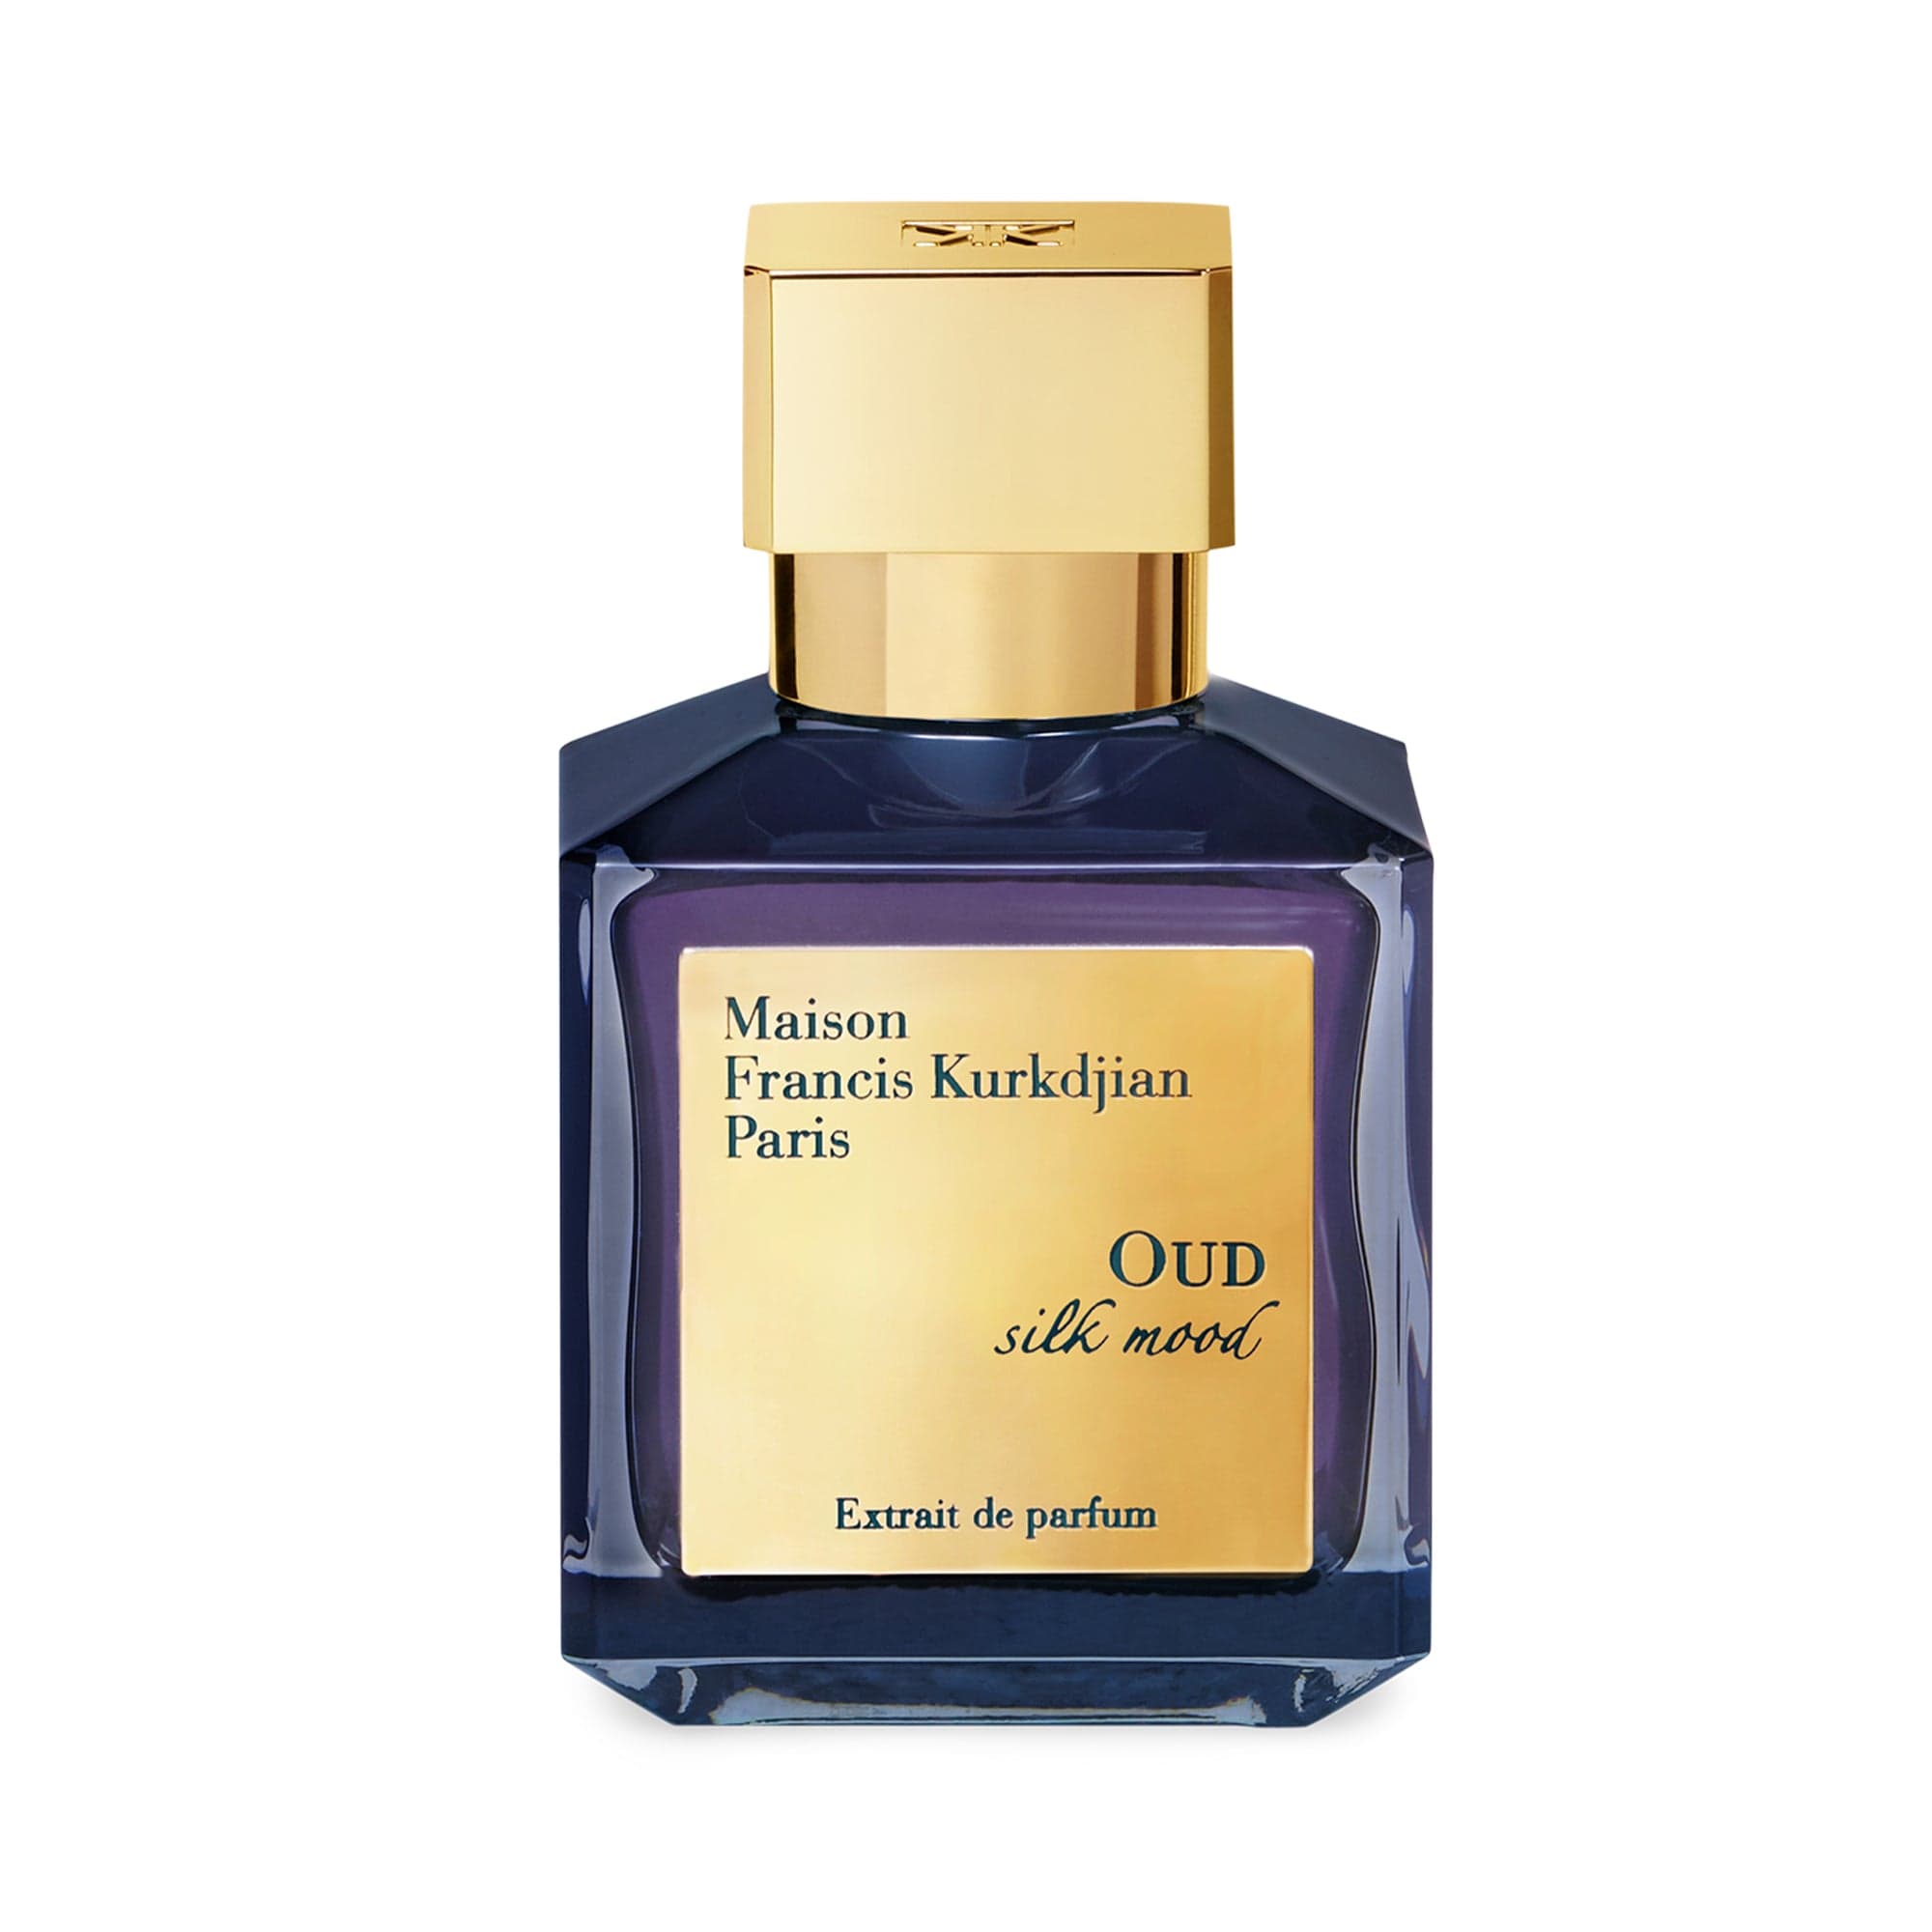 OUD Silk Mood Maison Francis Kurkdjian Perfume Extract